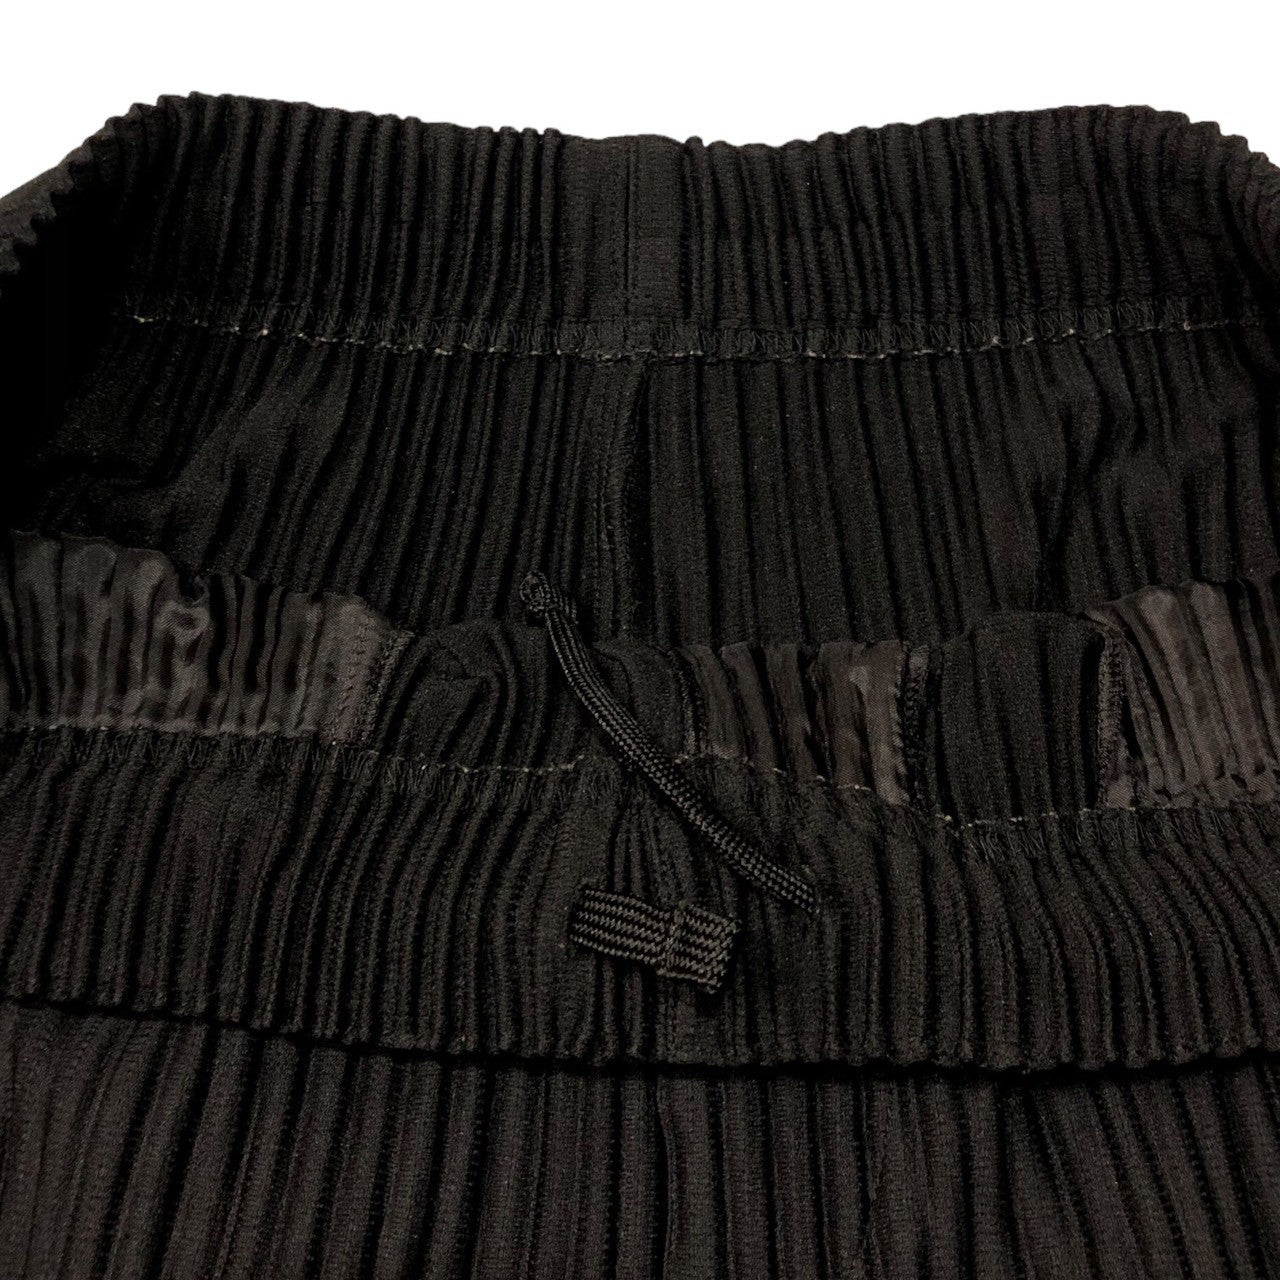 HOMME PLISSE ISSEY MIYAKE(オムプリッセイッセイミヤケ) Erased pleated tapered cropped pants 消しプリーツテーパードクロップドパンツ HP91JF103 1(S程度) ブラック 完売品